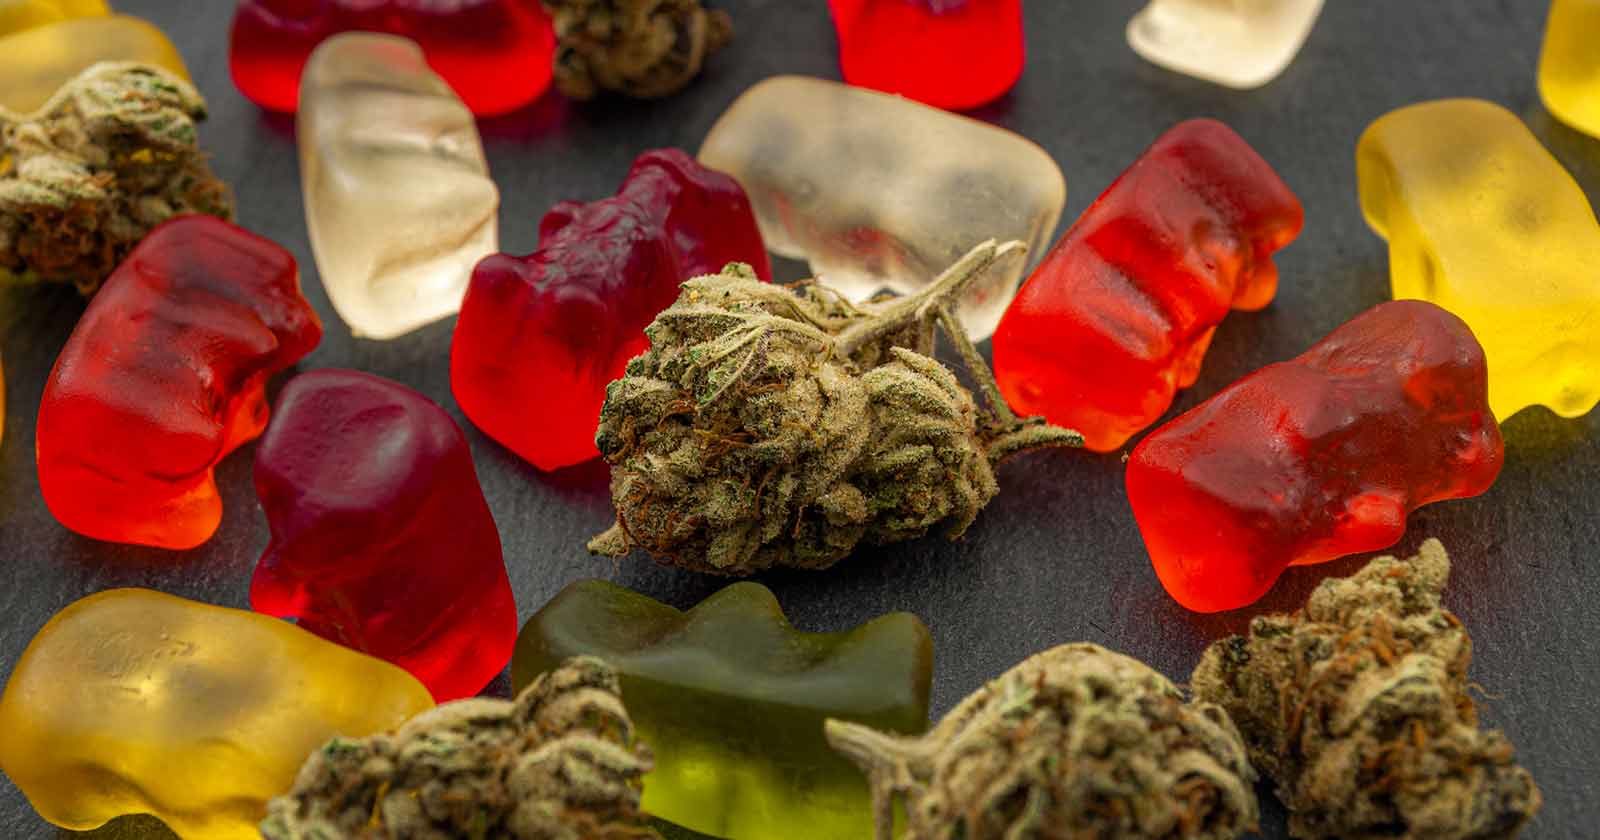 FDA warns 5 companies illegal cannabis products